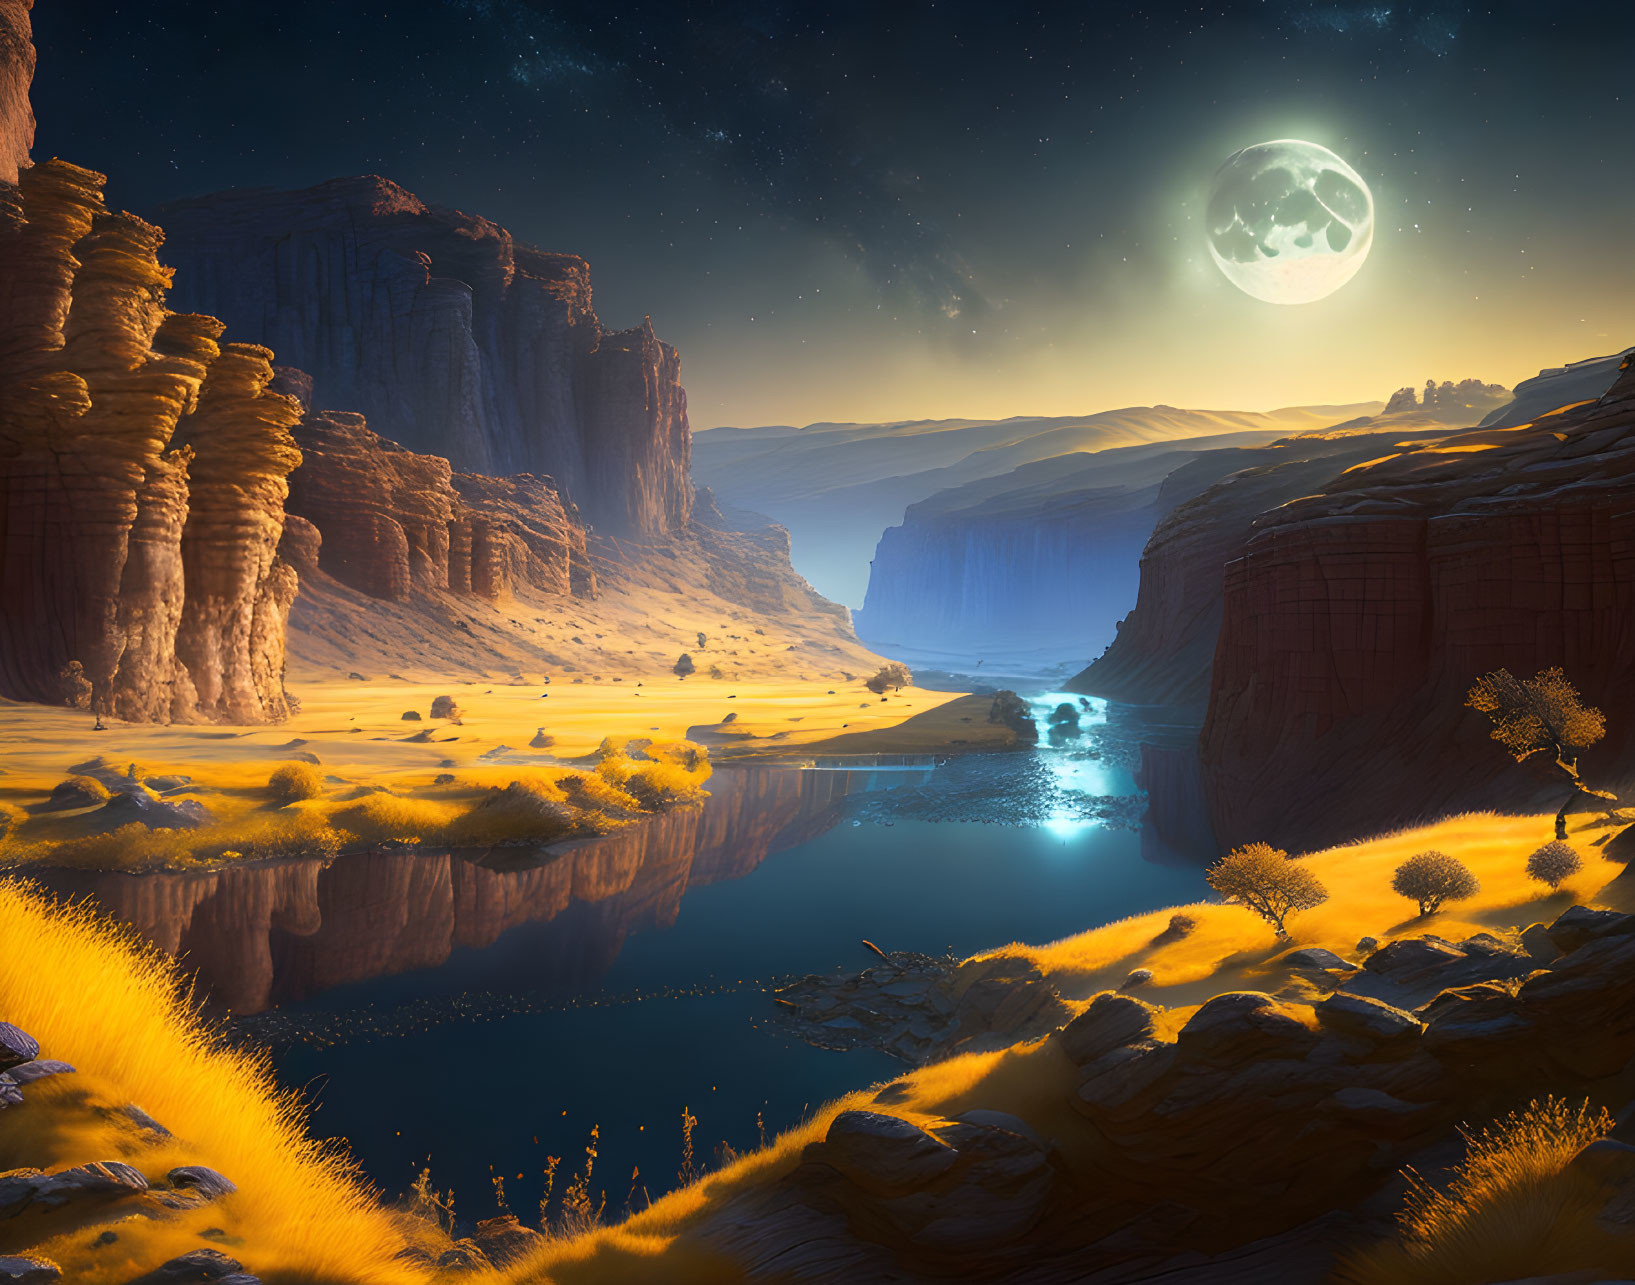 Tranquil river under luminous full moon